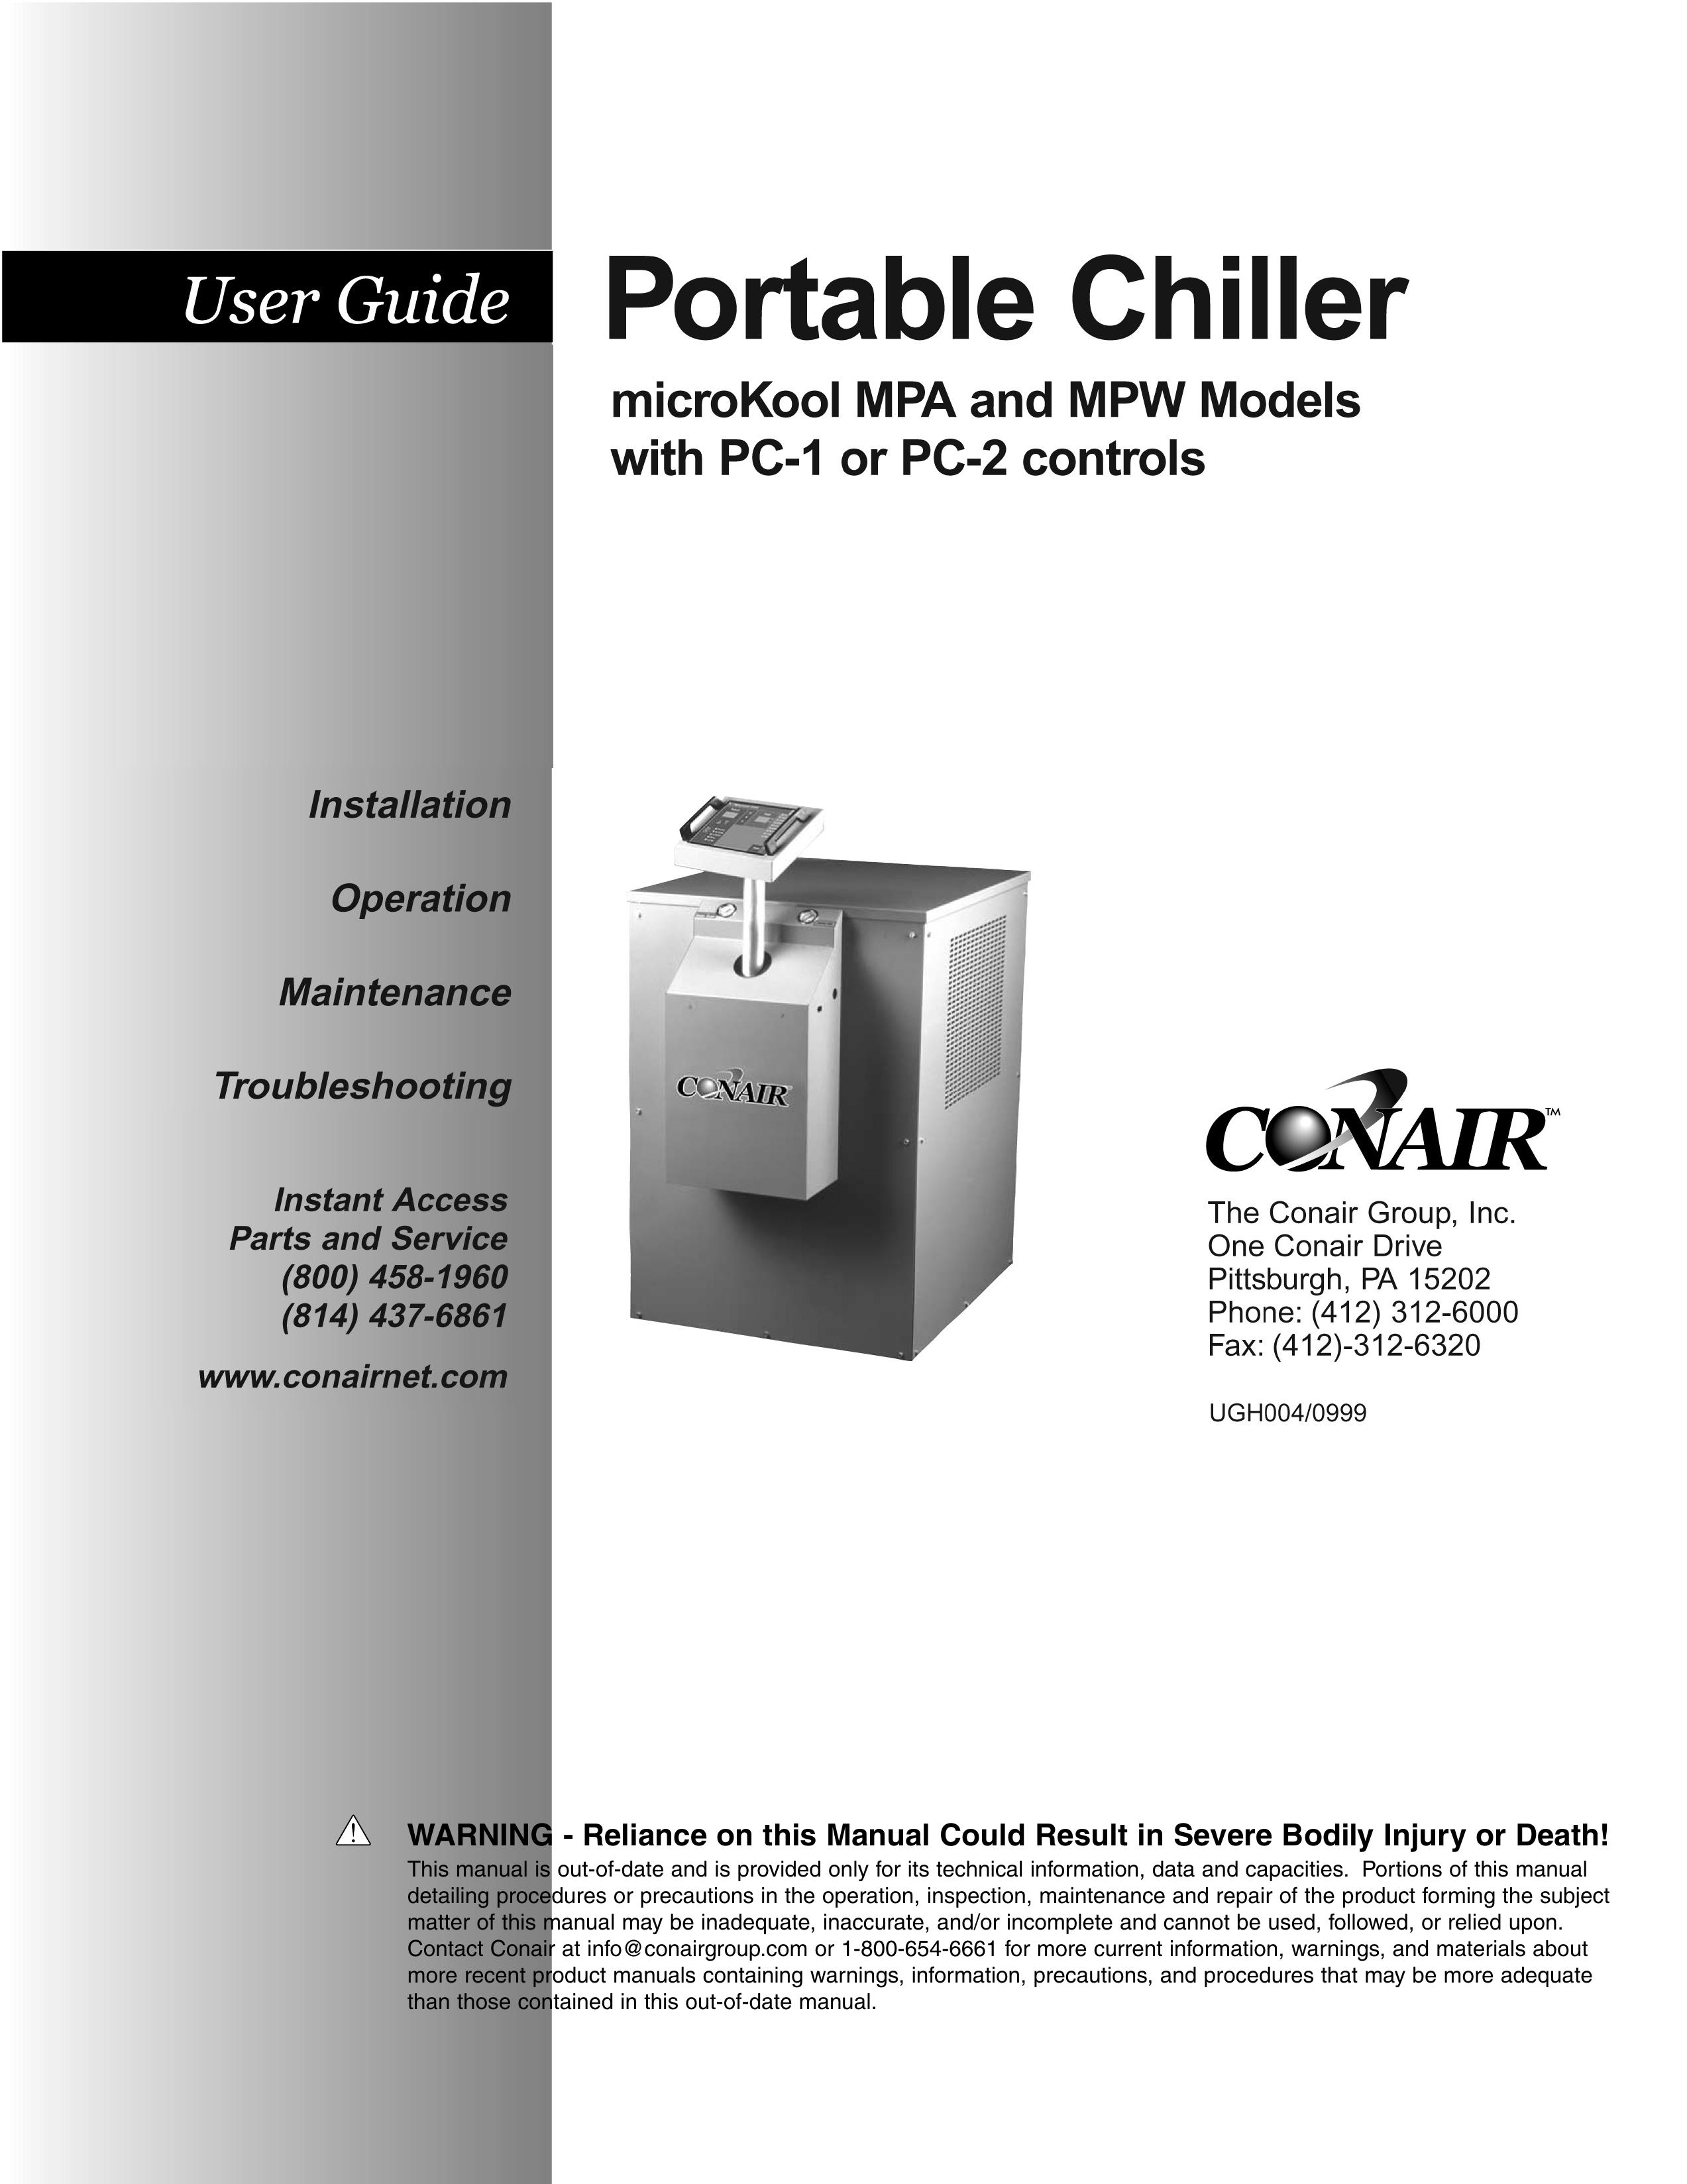 Conair MPA Refrigerator User Manual